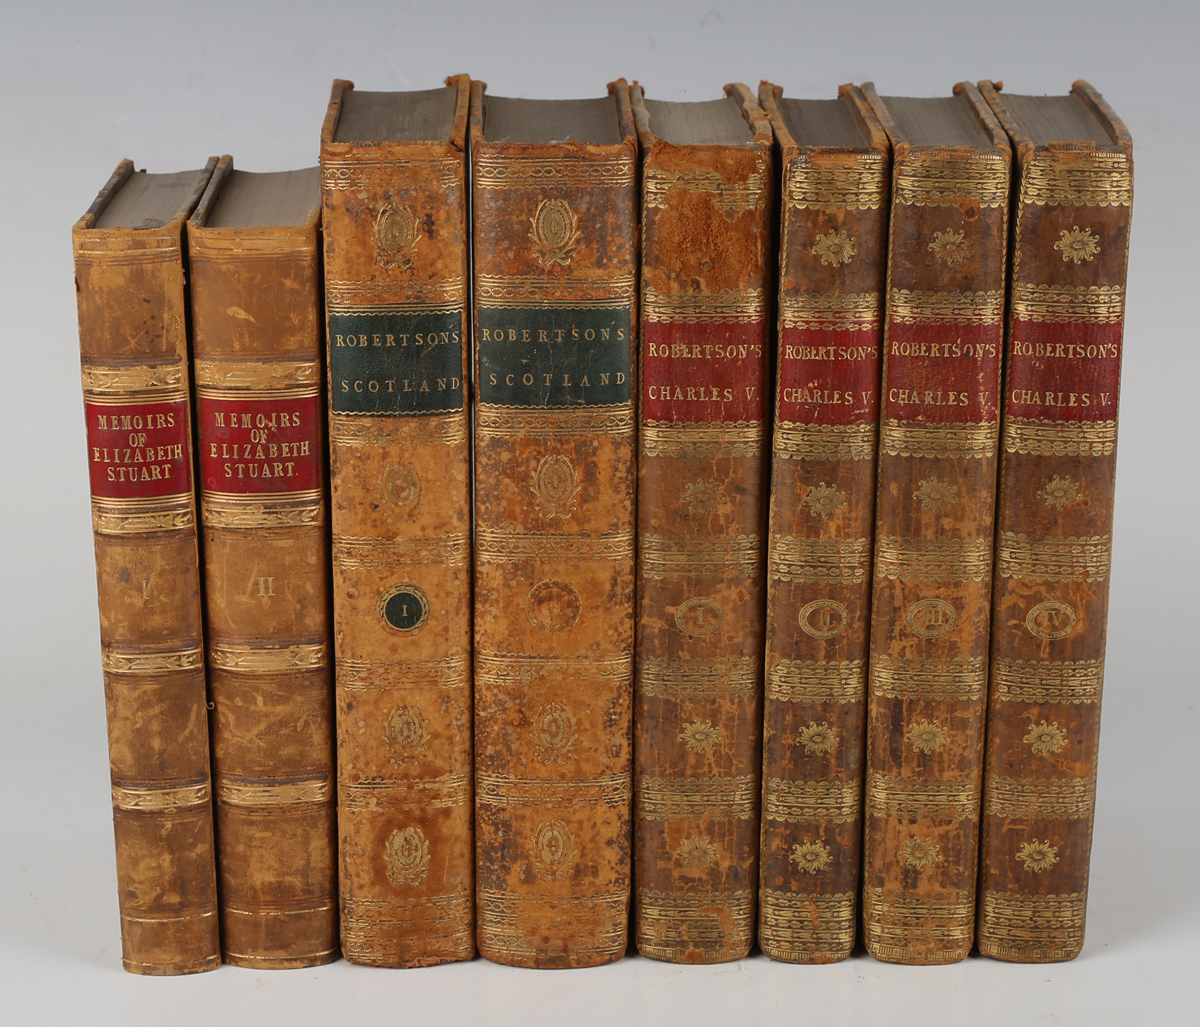 BINDINGS. - William ROBERTSON. The History of Scotland. London: T. Cadell, 1794. 2 vols., fourteenth